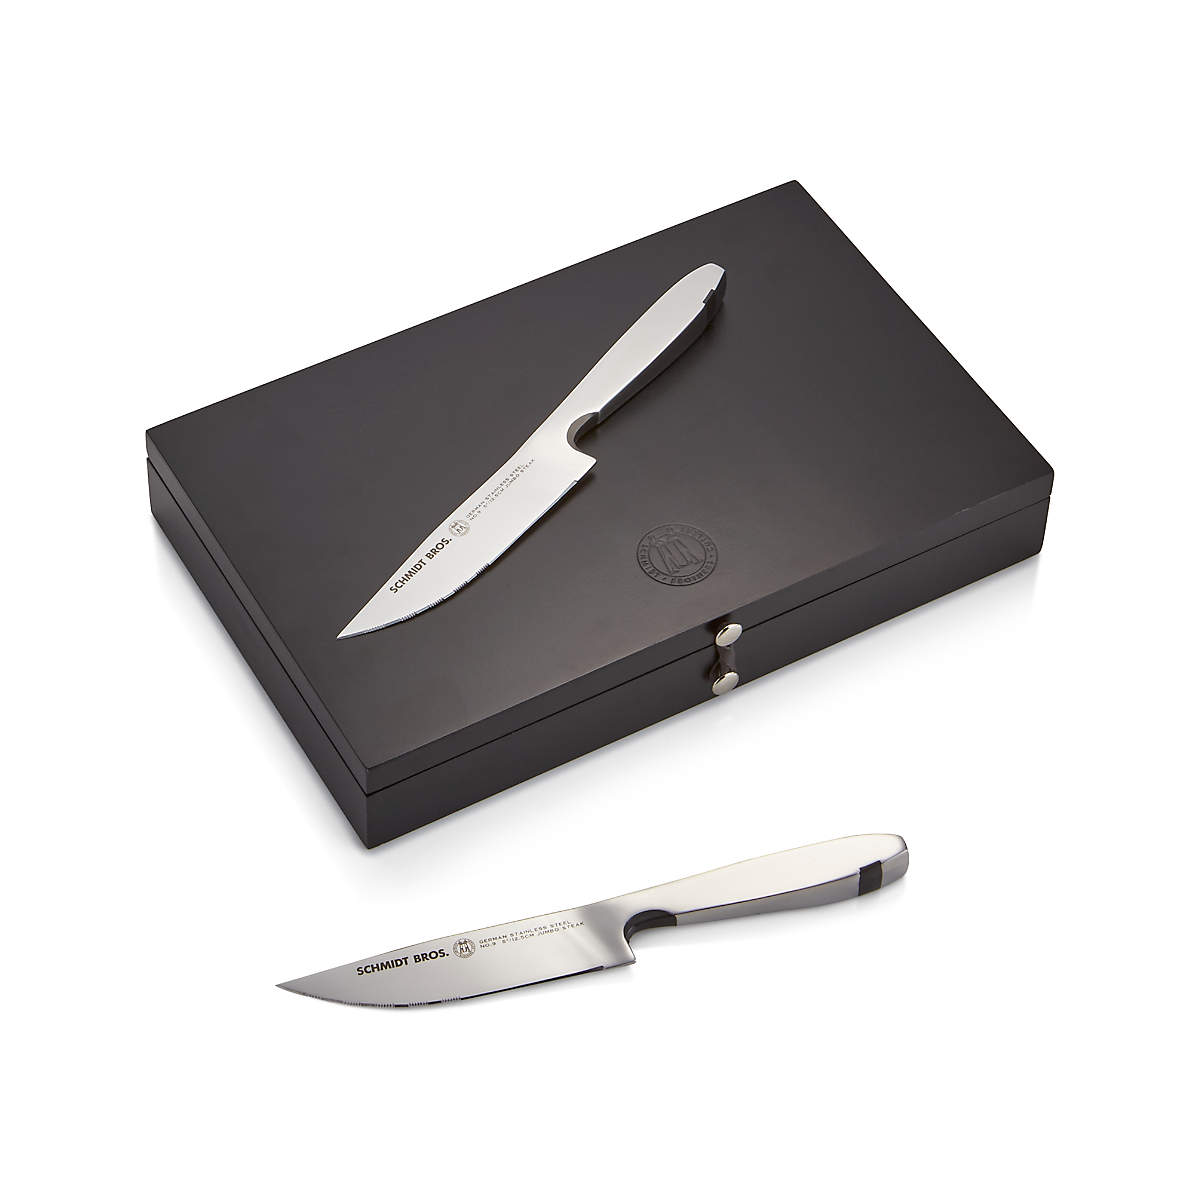 Certified Angus Beef Modern Knife Block Set - Kitchen Knife Set with Block, Premium Steak Knives and Genuine German Steel Blades with G-10 Triple